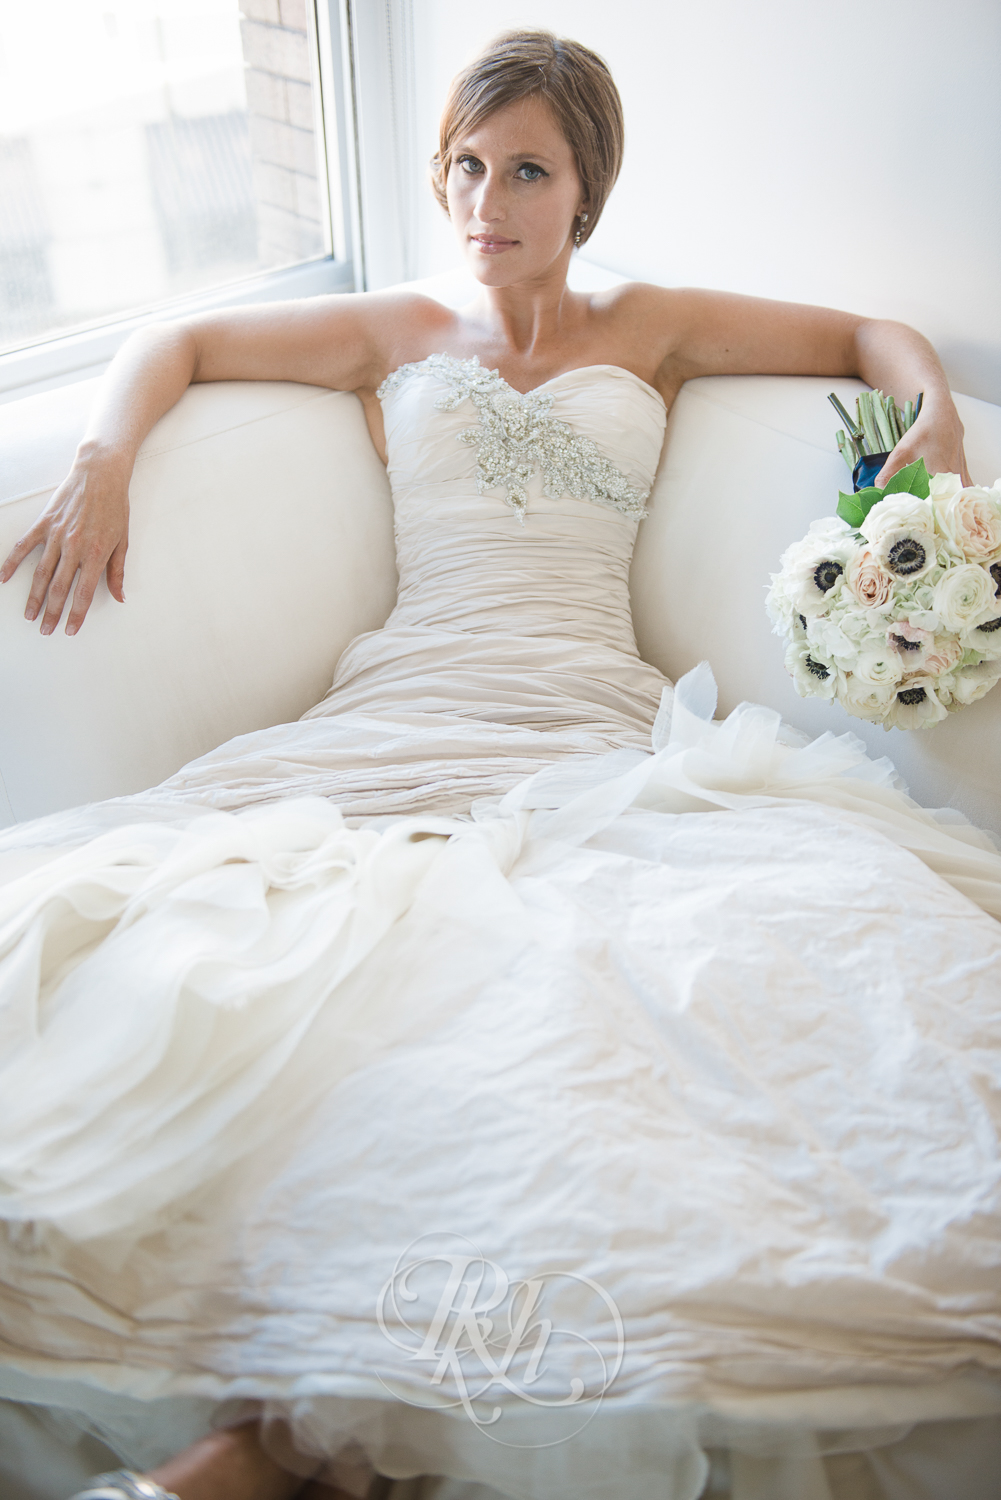  Minneapolis Wedding Photography - Becca & Justin - RKH Images-24 